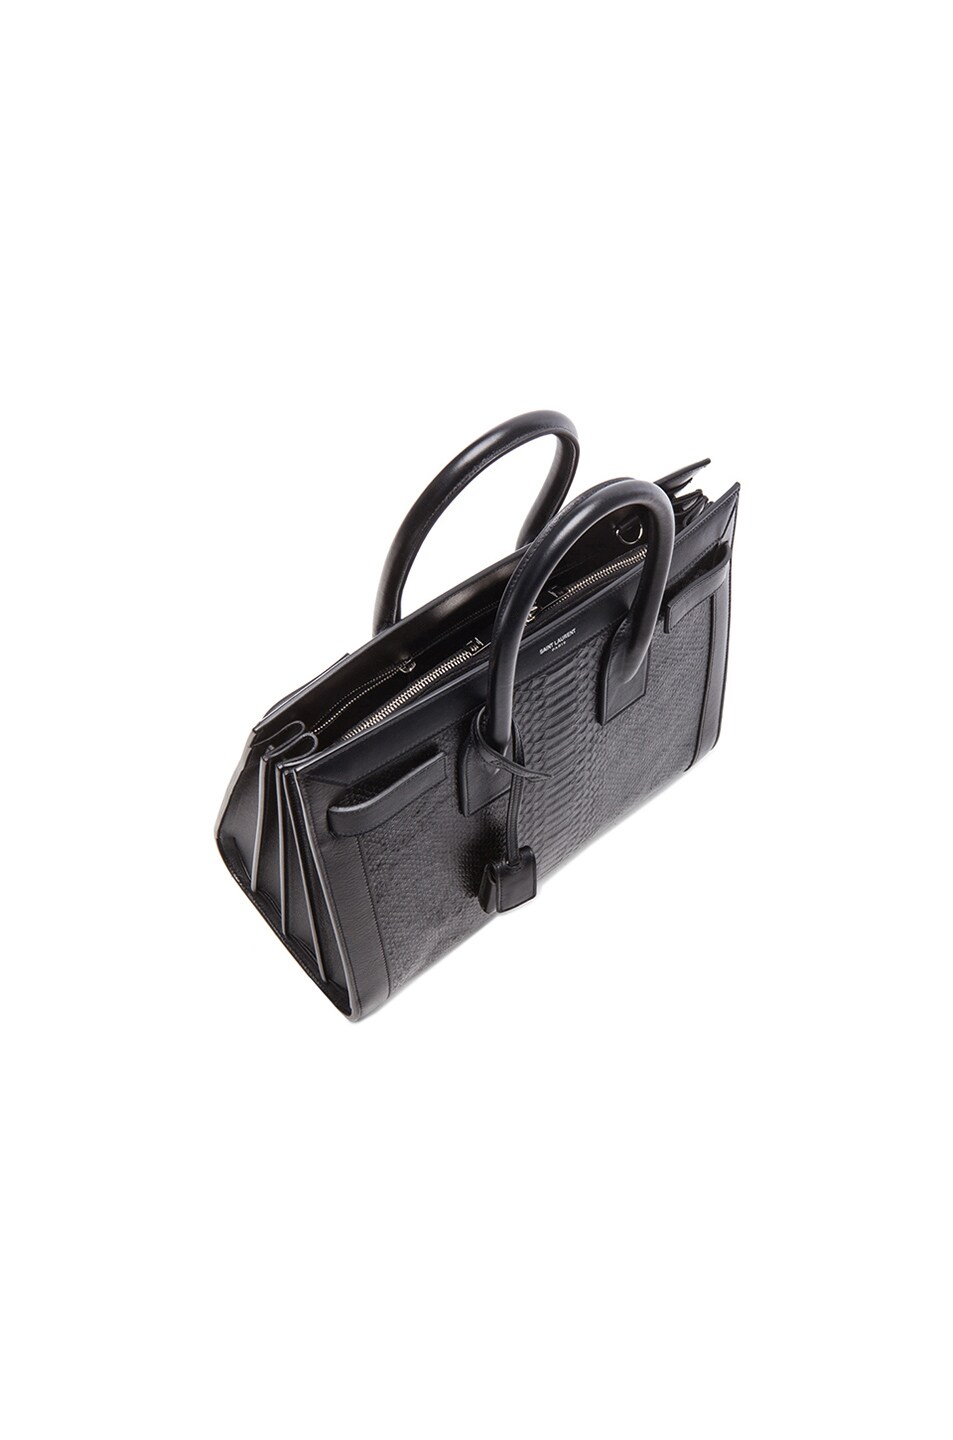 ysl laurent bag - Saint Laurent Small Sac De Jour Embossed Carryall Bag in Python ...